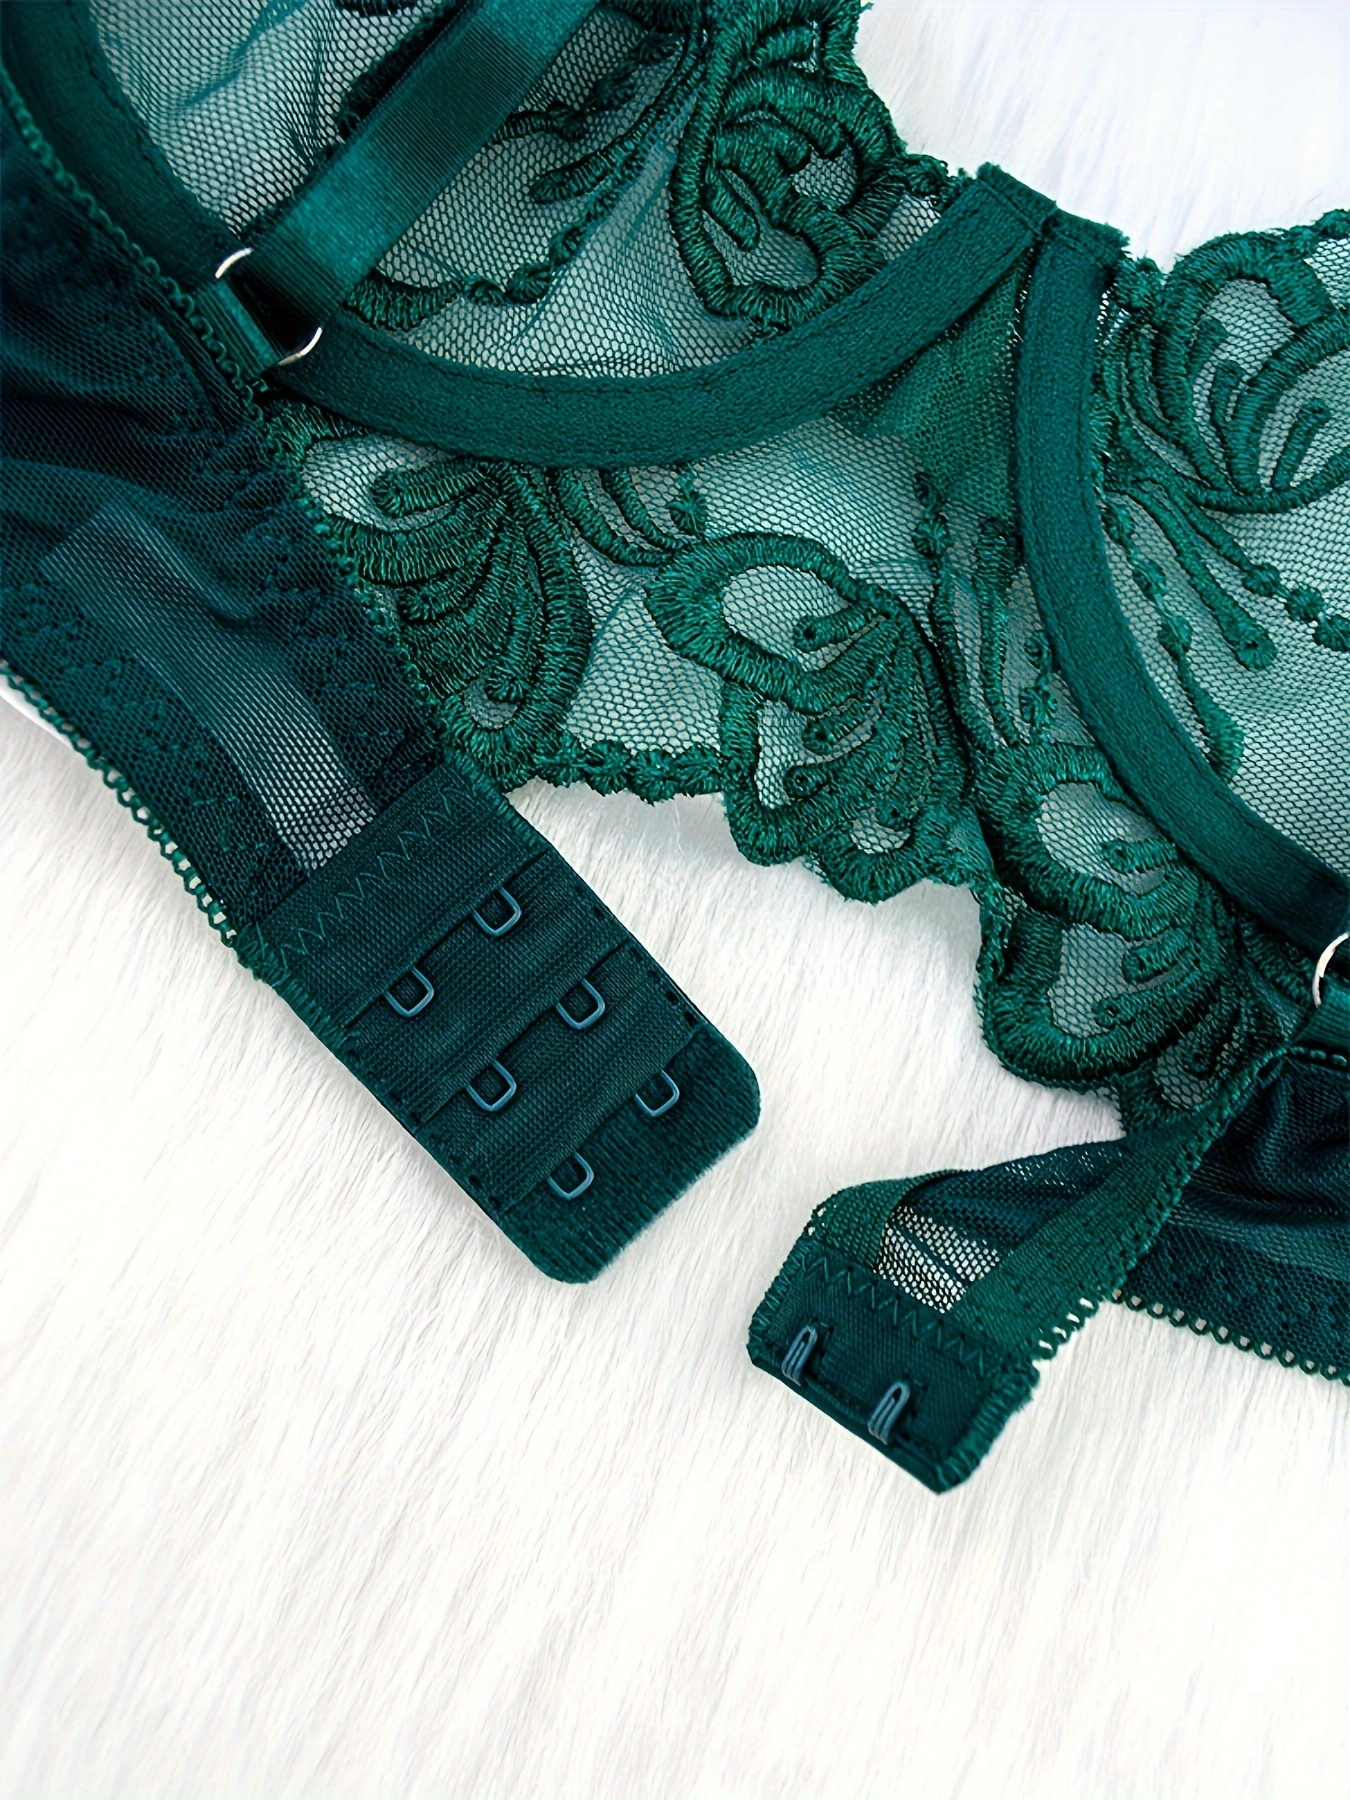 Blue mesh underwear set - Sheer bra and see through thong - Sheer lingerie  - Shop LaurinStore Women's Underwear - Pinkoi